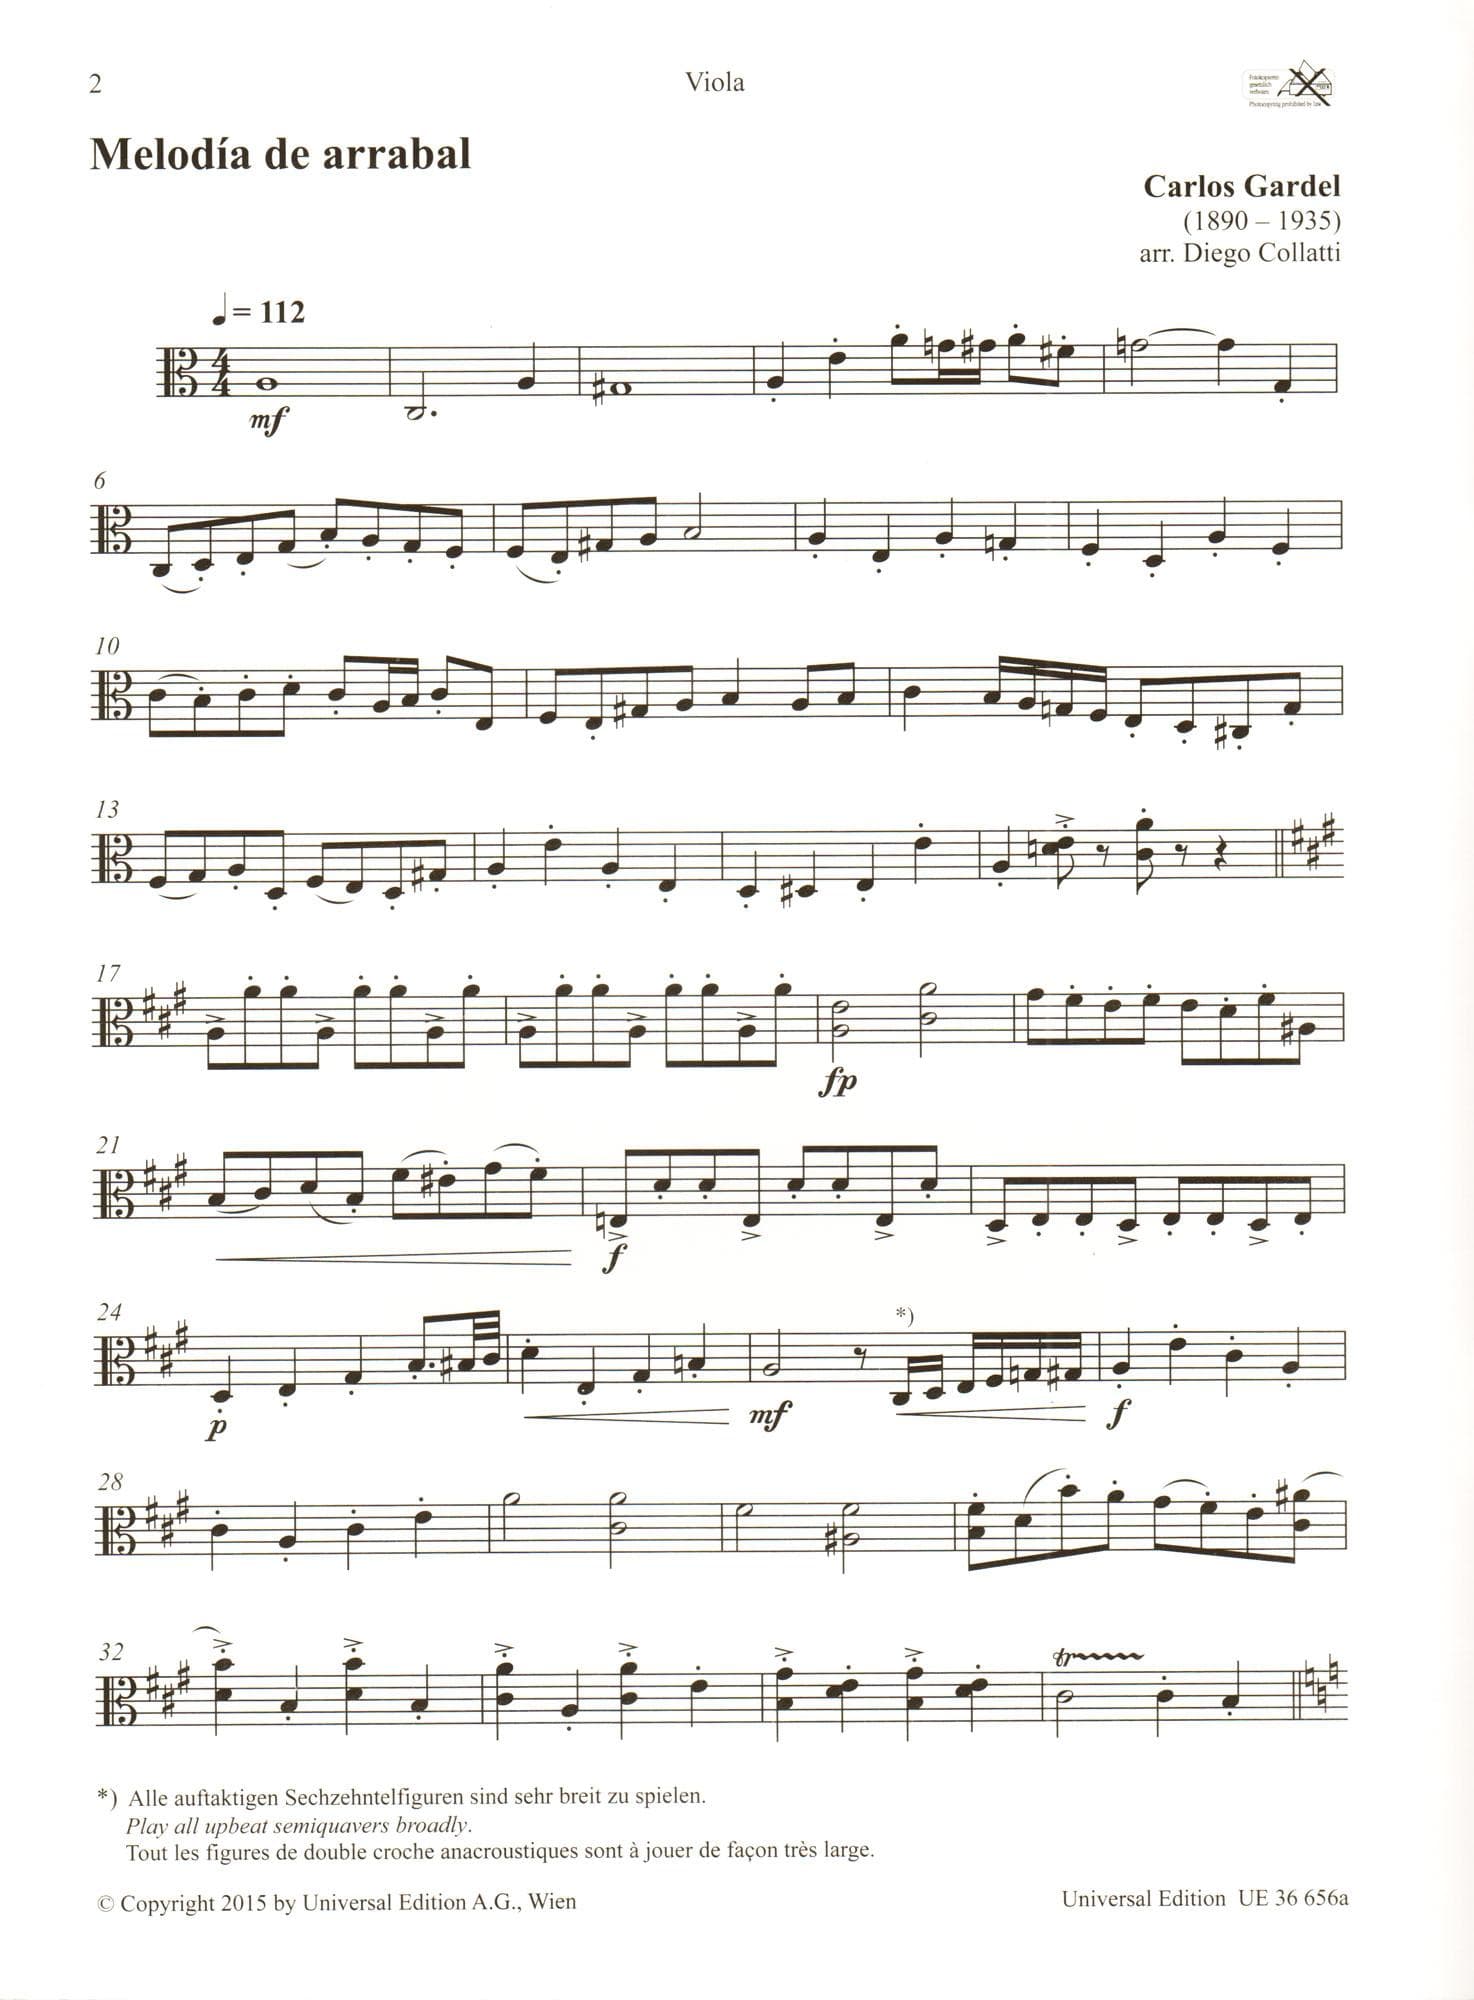 Carlos Gardel - Tango Duets - for Violin and Cello (or Viola) - arranged by Diego Collatti - Universal Edition